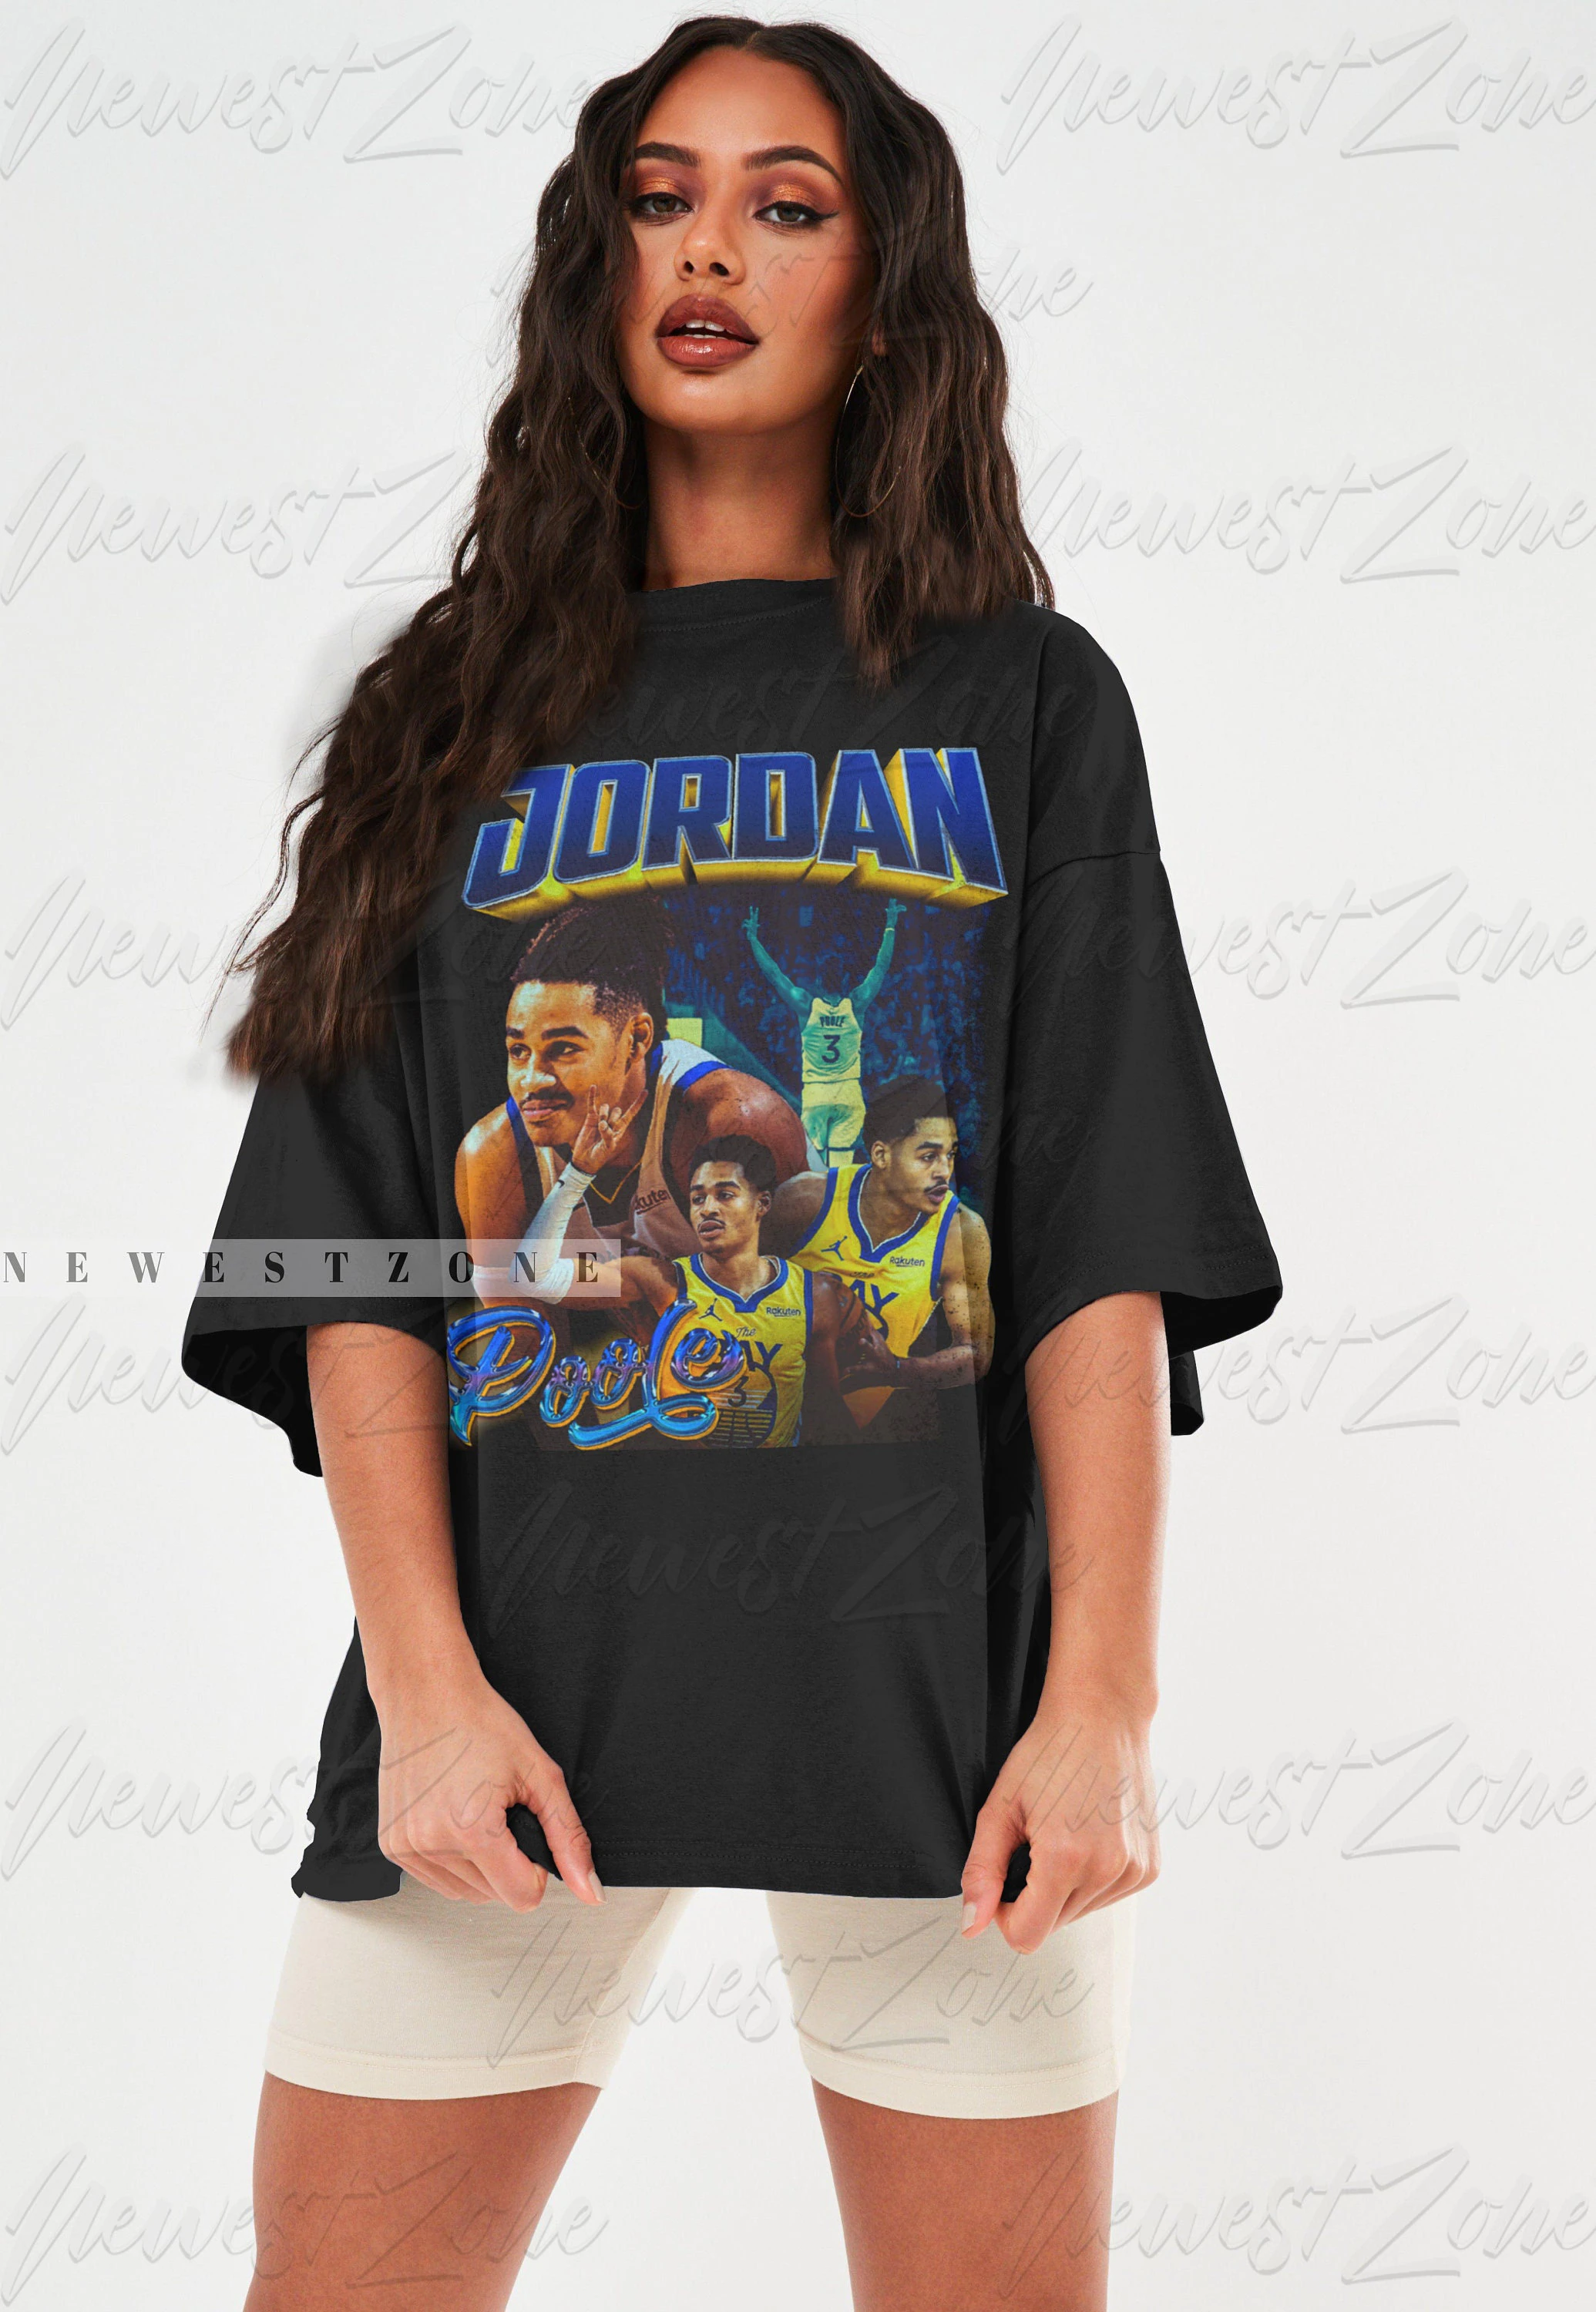 Jordan Poole Vintage 90s Style T-Shirt - Trends Bedding